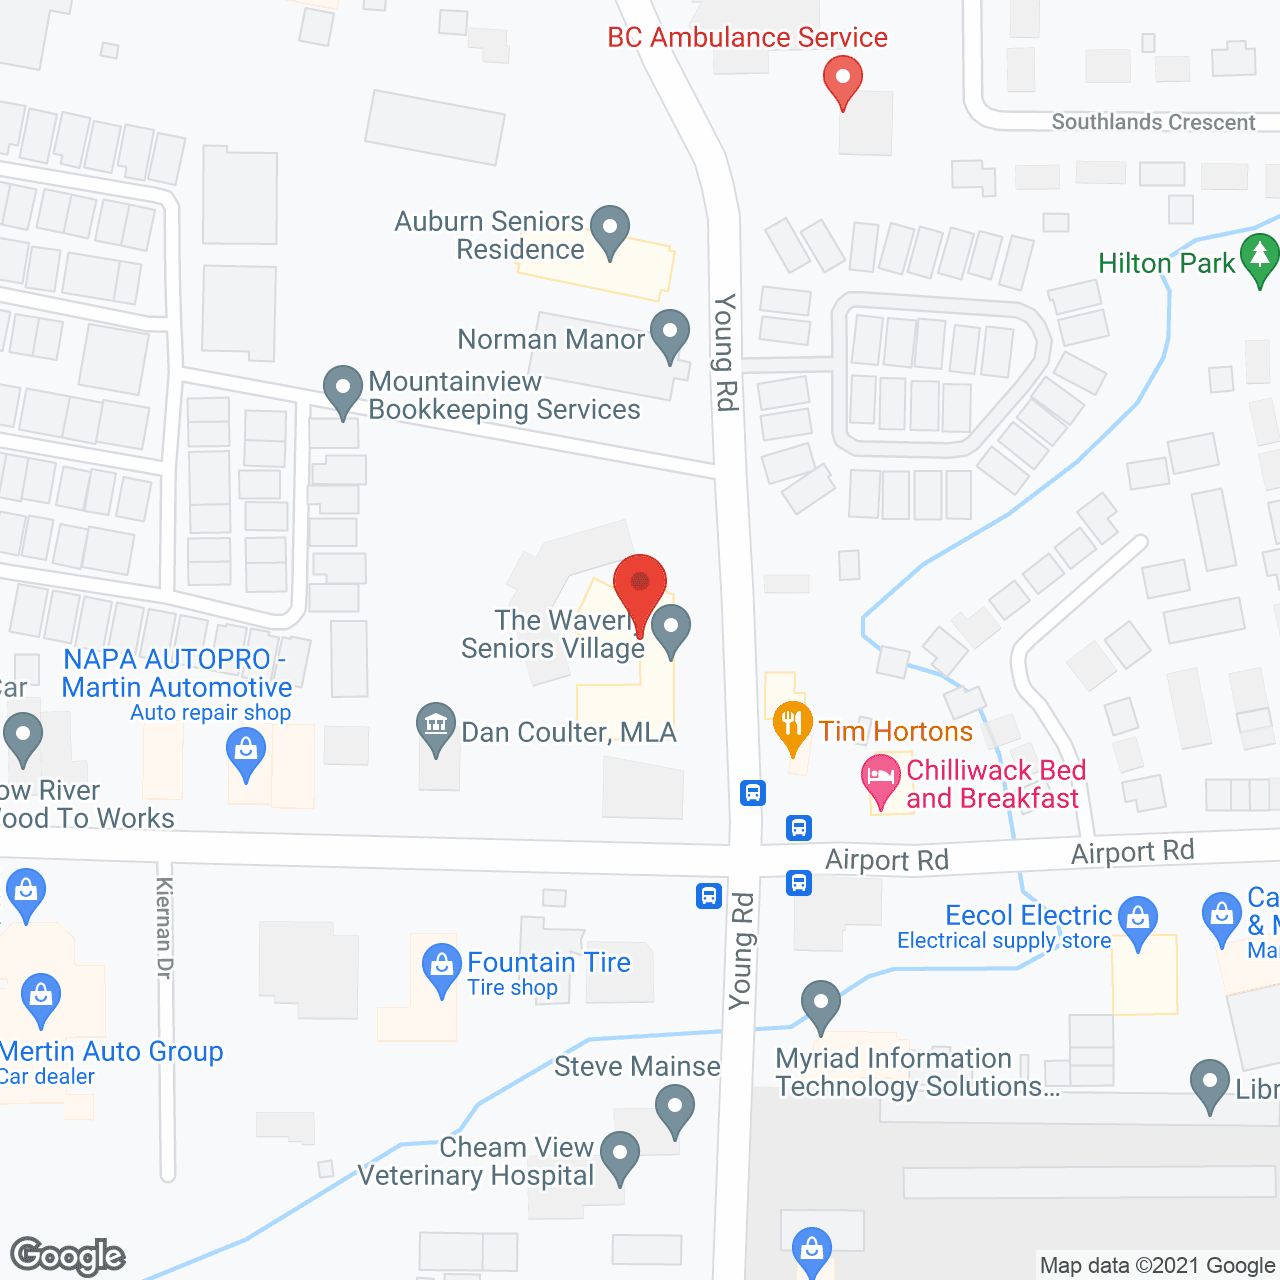 Waverly Seniors Village in google map